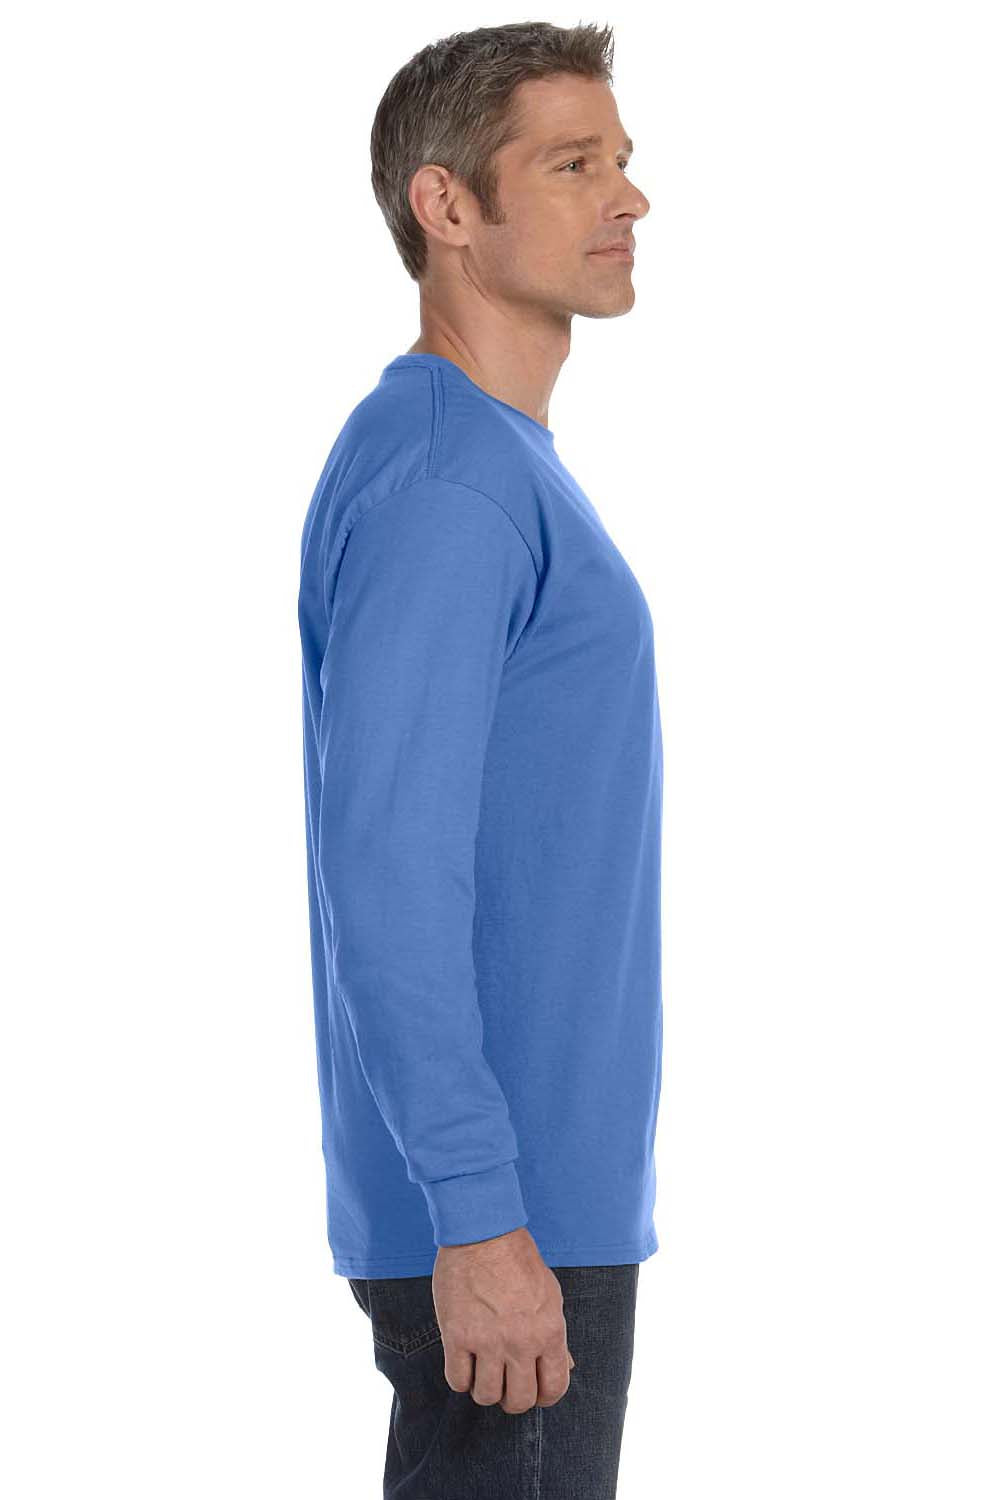 Jerzees 29L Mens Dri-Power Moisture Wicking Long Sleeve Crewneck T-Shirt Columbia Blue Side